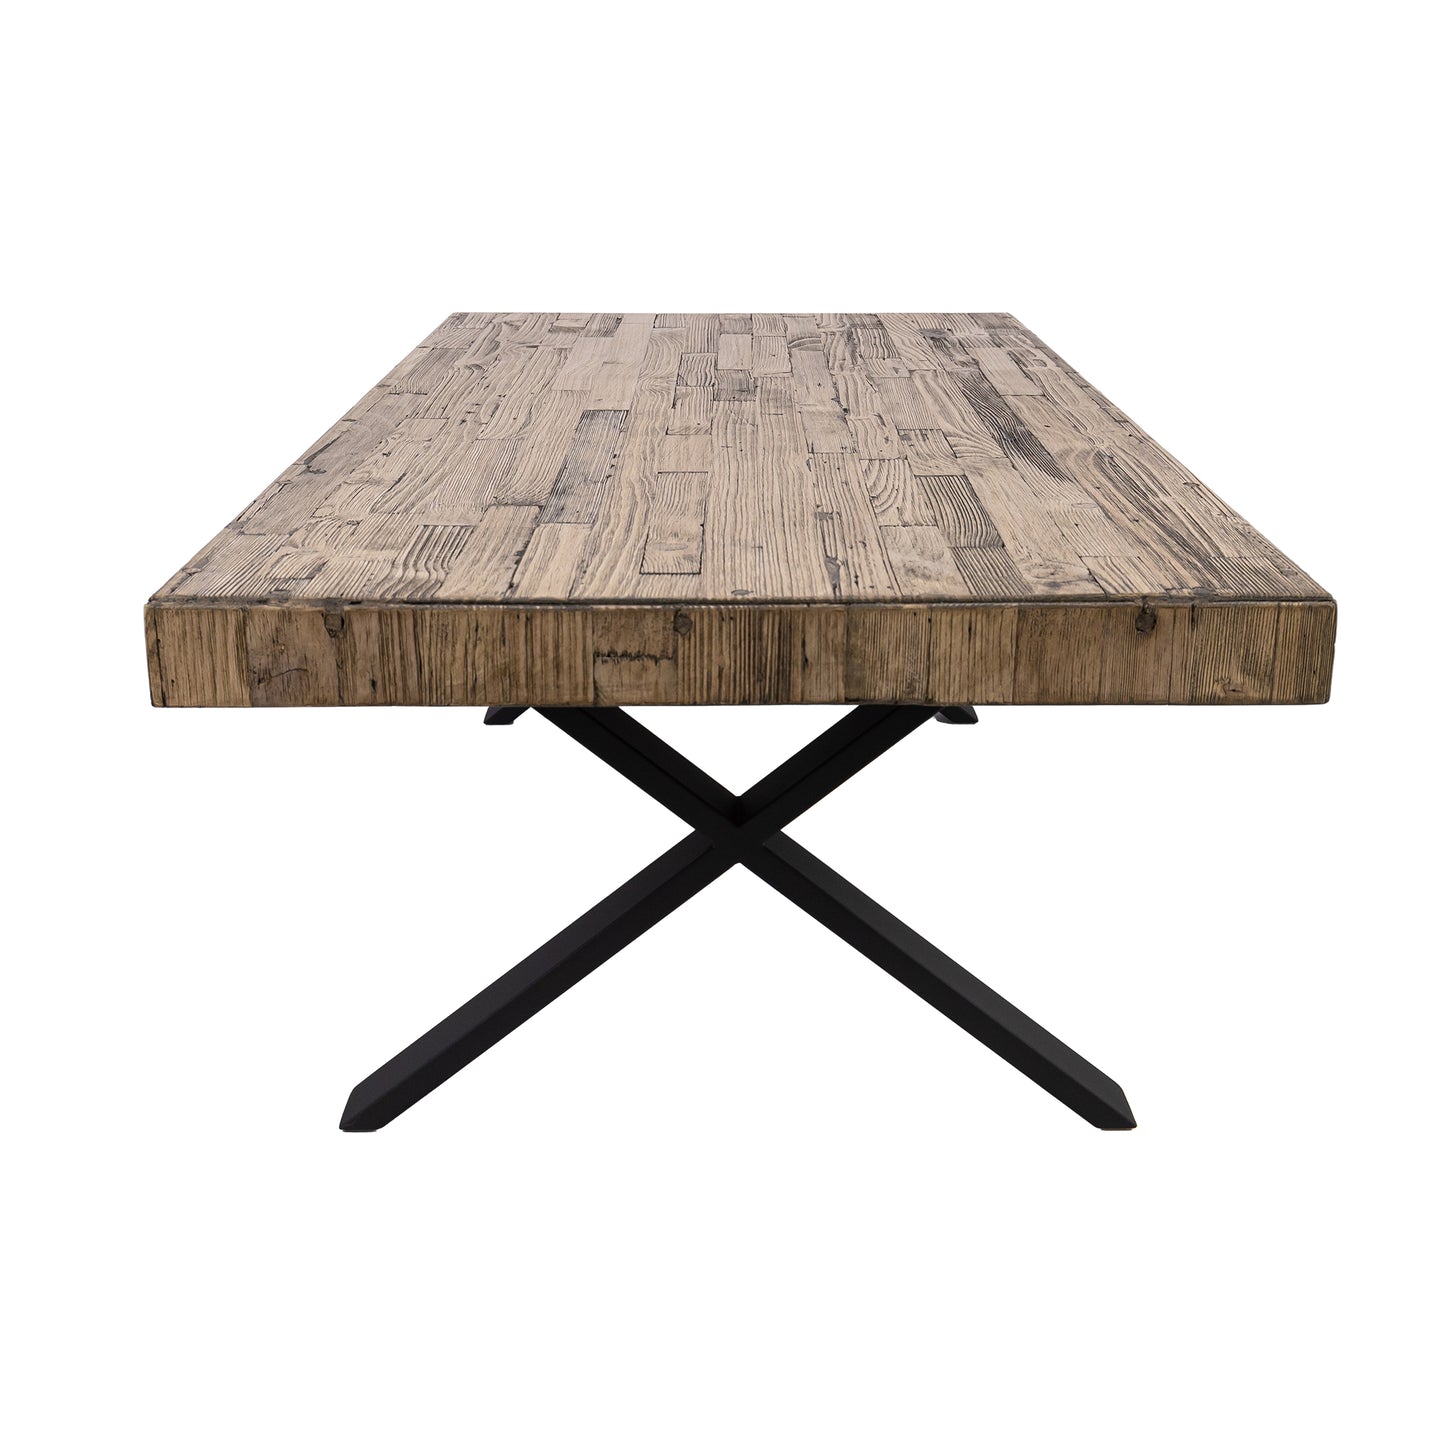 Anika Laminated Solid Pine Top Metal Leg Coffee Table 132cm - Smoke